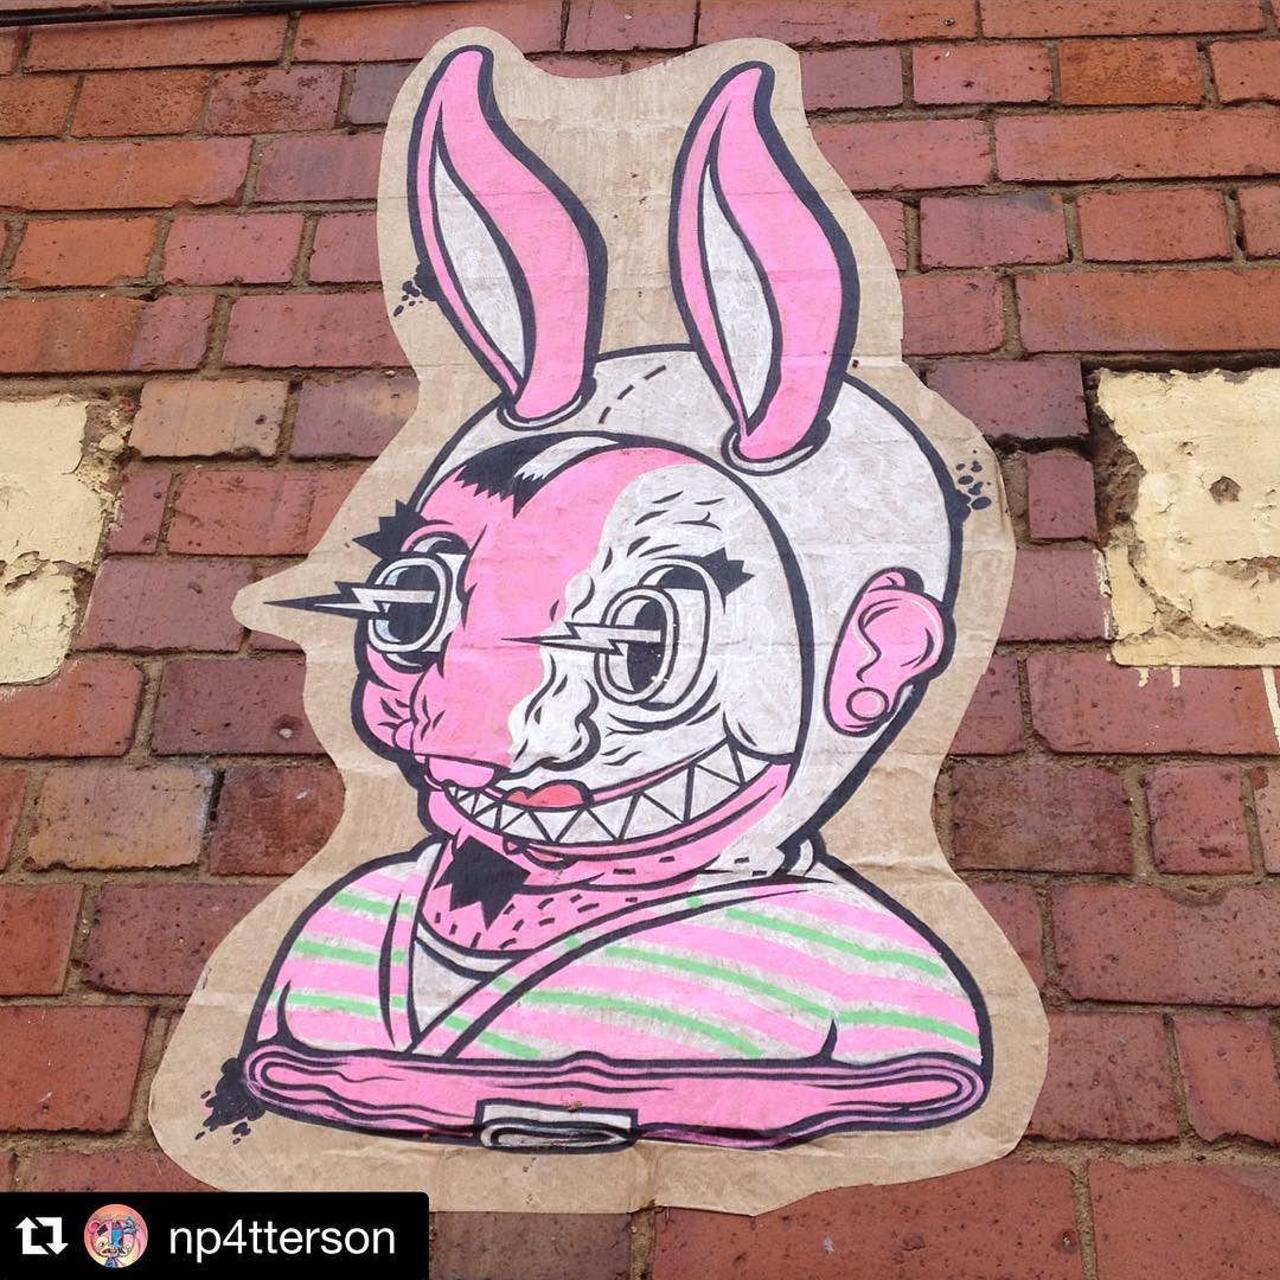 RT @GraffSpotting: #GraffSpotting #PhotoGraff #Instagram  @setdebelleza #streetart #graffiti #birminghamstreetart #digbeth #GraffitiUK http://t.co/fzgSmwUa0r